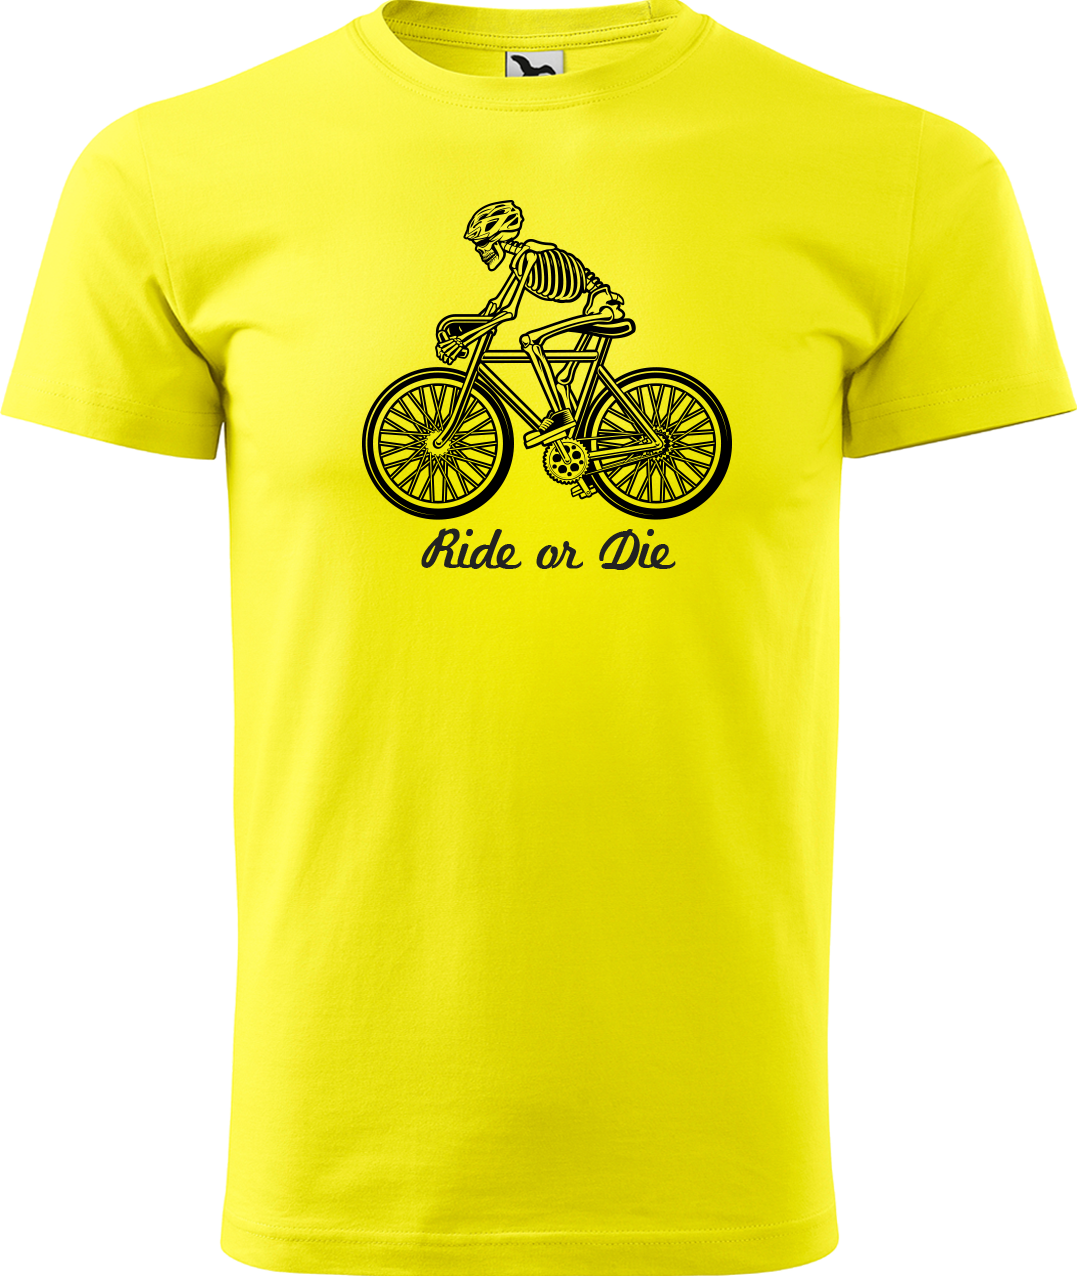 Pánské tričko pro cyklistu - Ride or Die Velikost: 2XL, Barva: Žlutá (04)